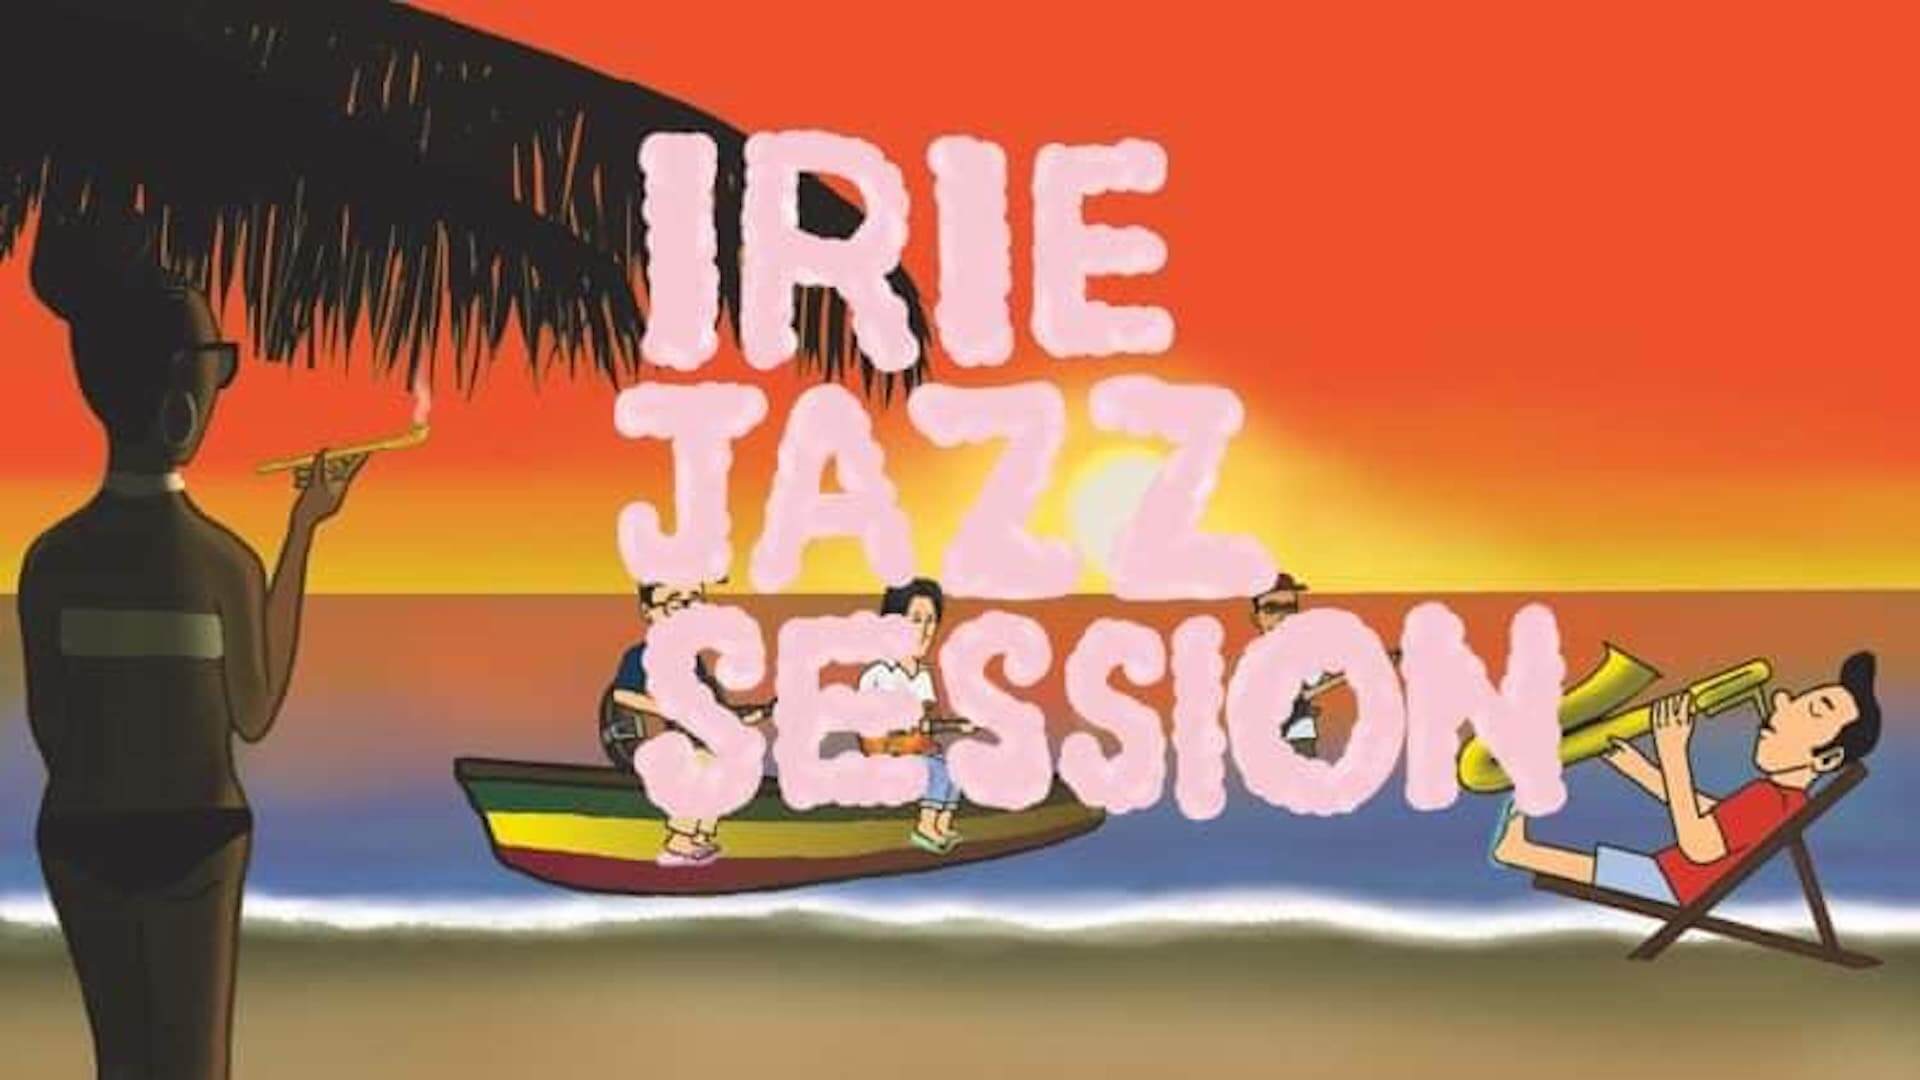 IRIE JAZZ SESSIONがDave Brubeckによる不朽のクラシックス“Take Five”をリメイク！限定アナログ7inchをリリース music210526_irie-jazz-session-210526_5